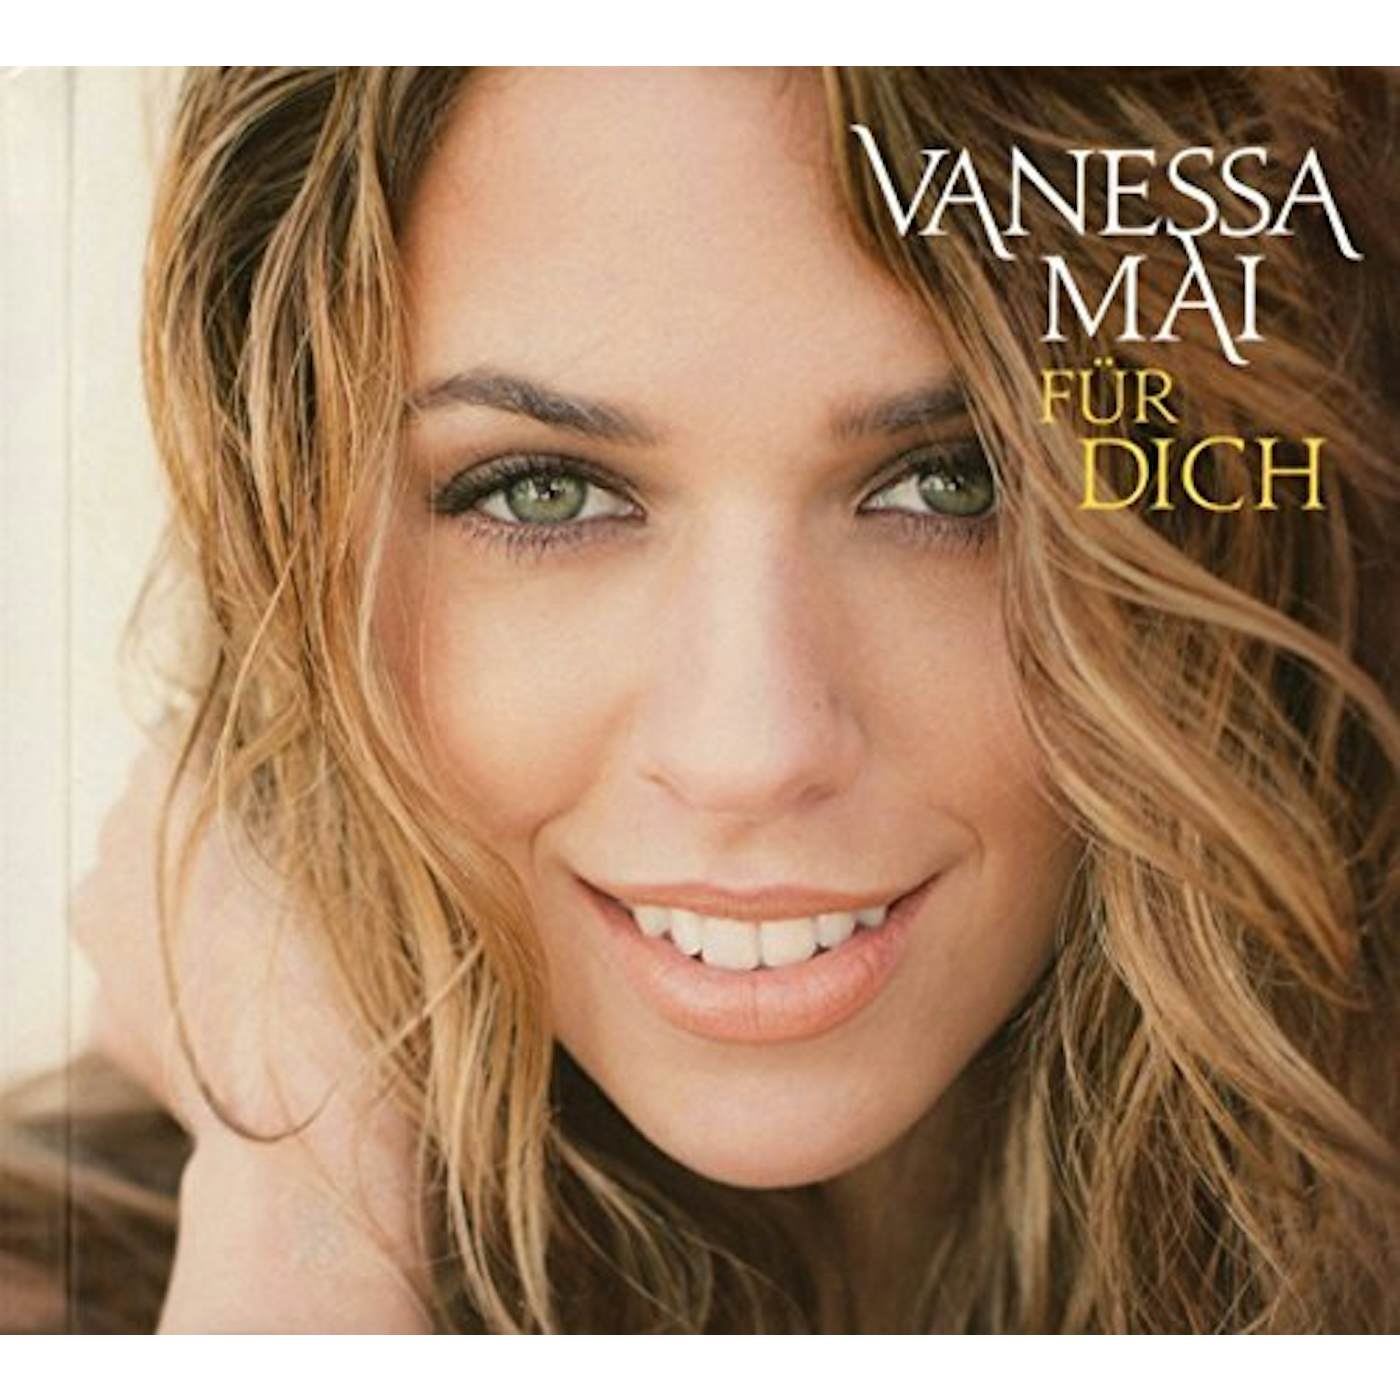 Vanessa Mai FUR DICH: LIMITED EDITION CD